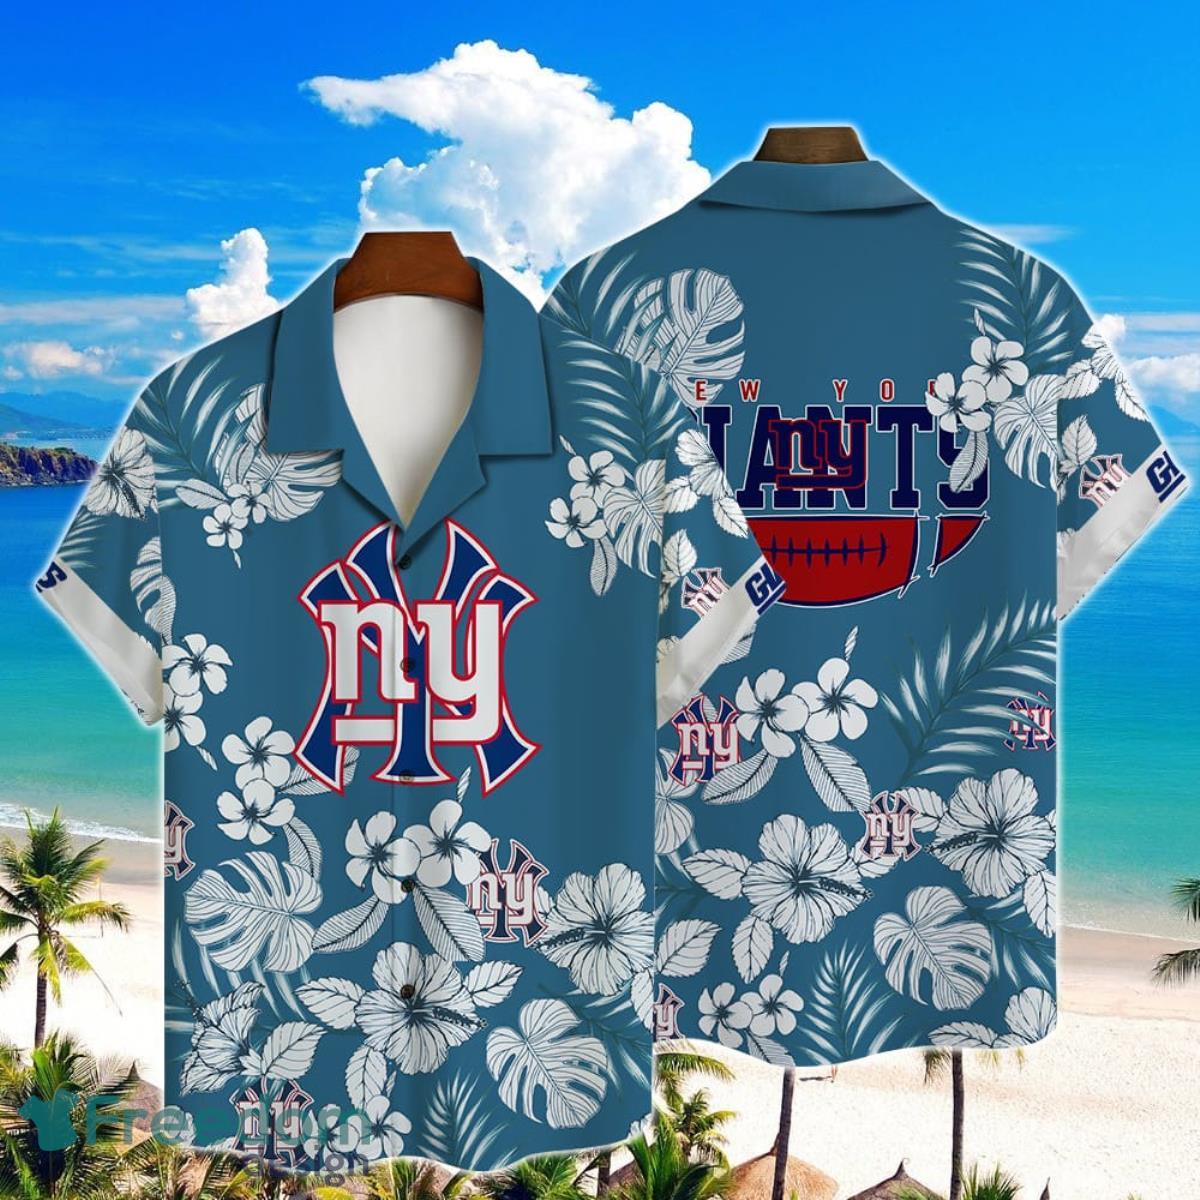 Chicago Cubs Major League Baseball MLB 3D Hawaiian Shirt For Real Fans -  Freedomdesign